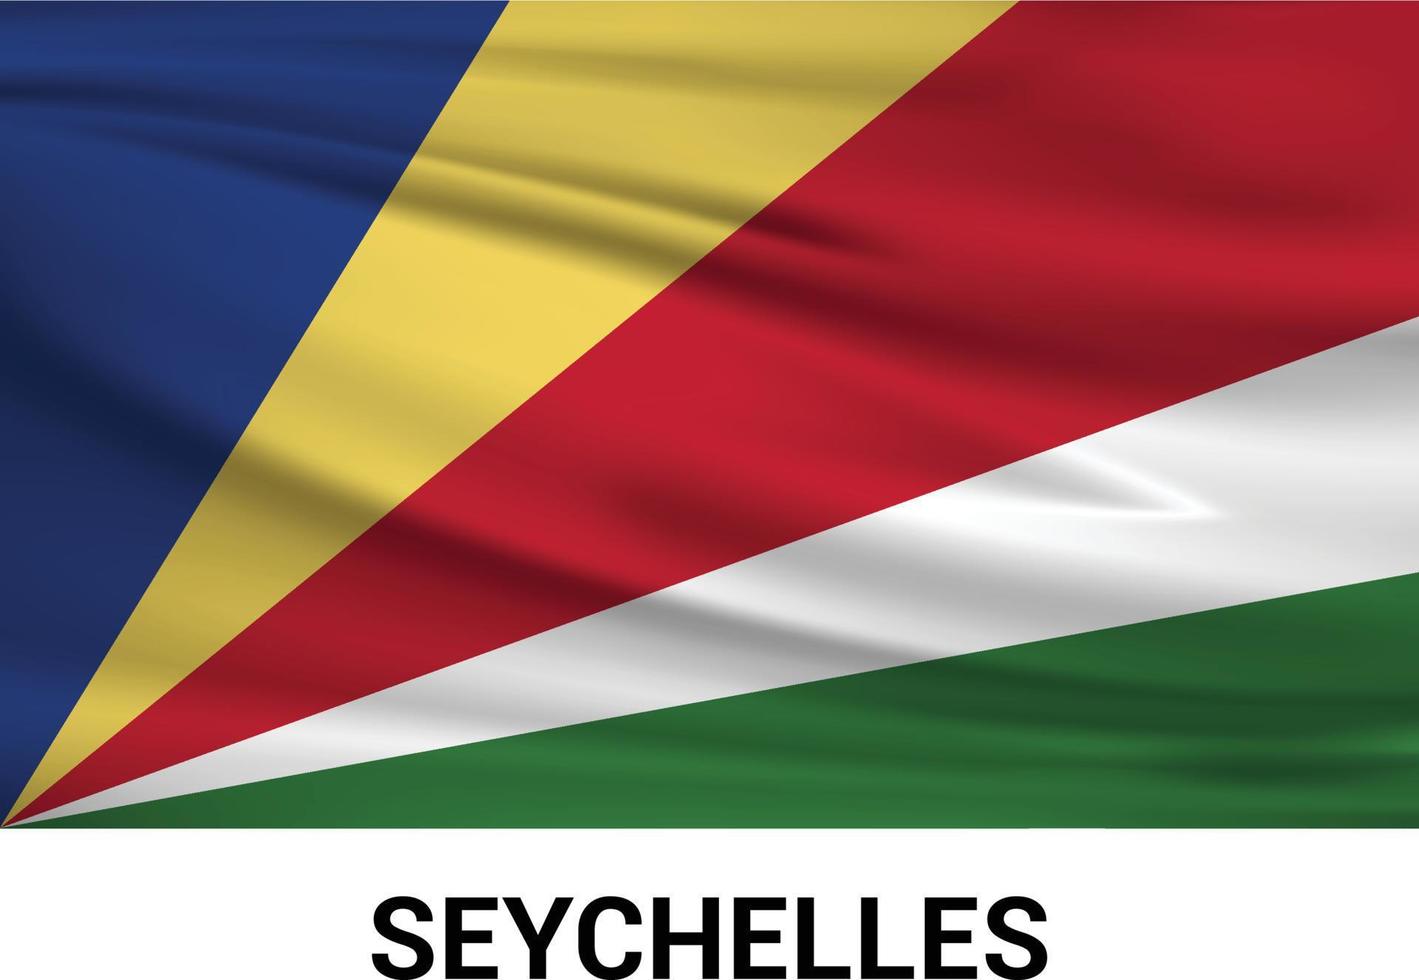 Seychelles bandiere design vettore